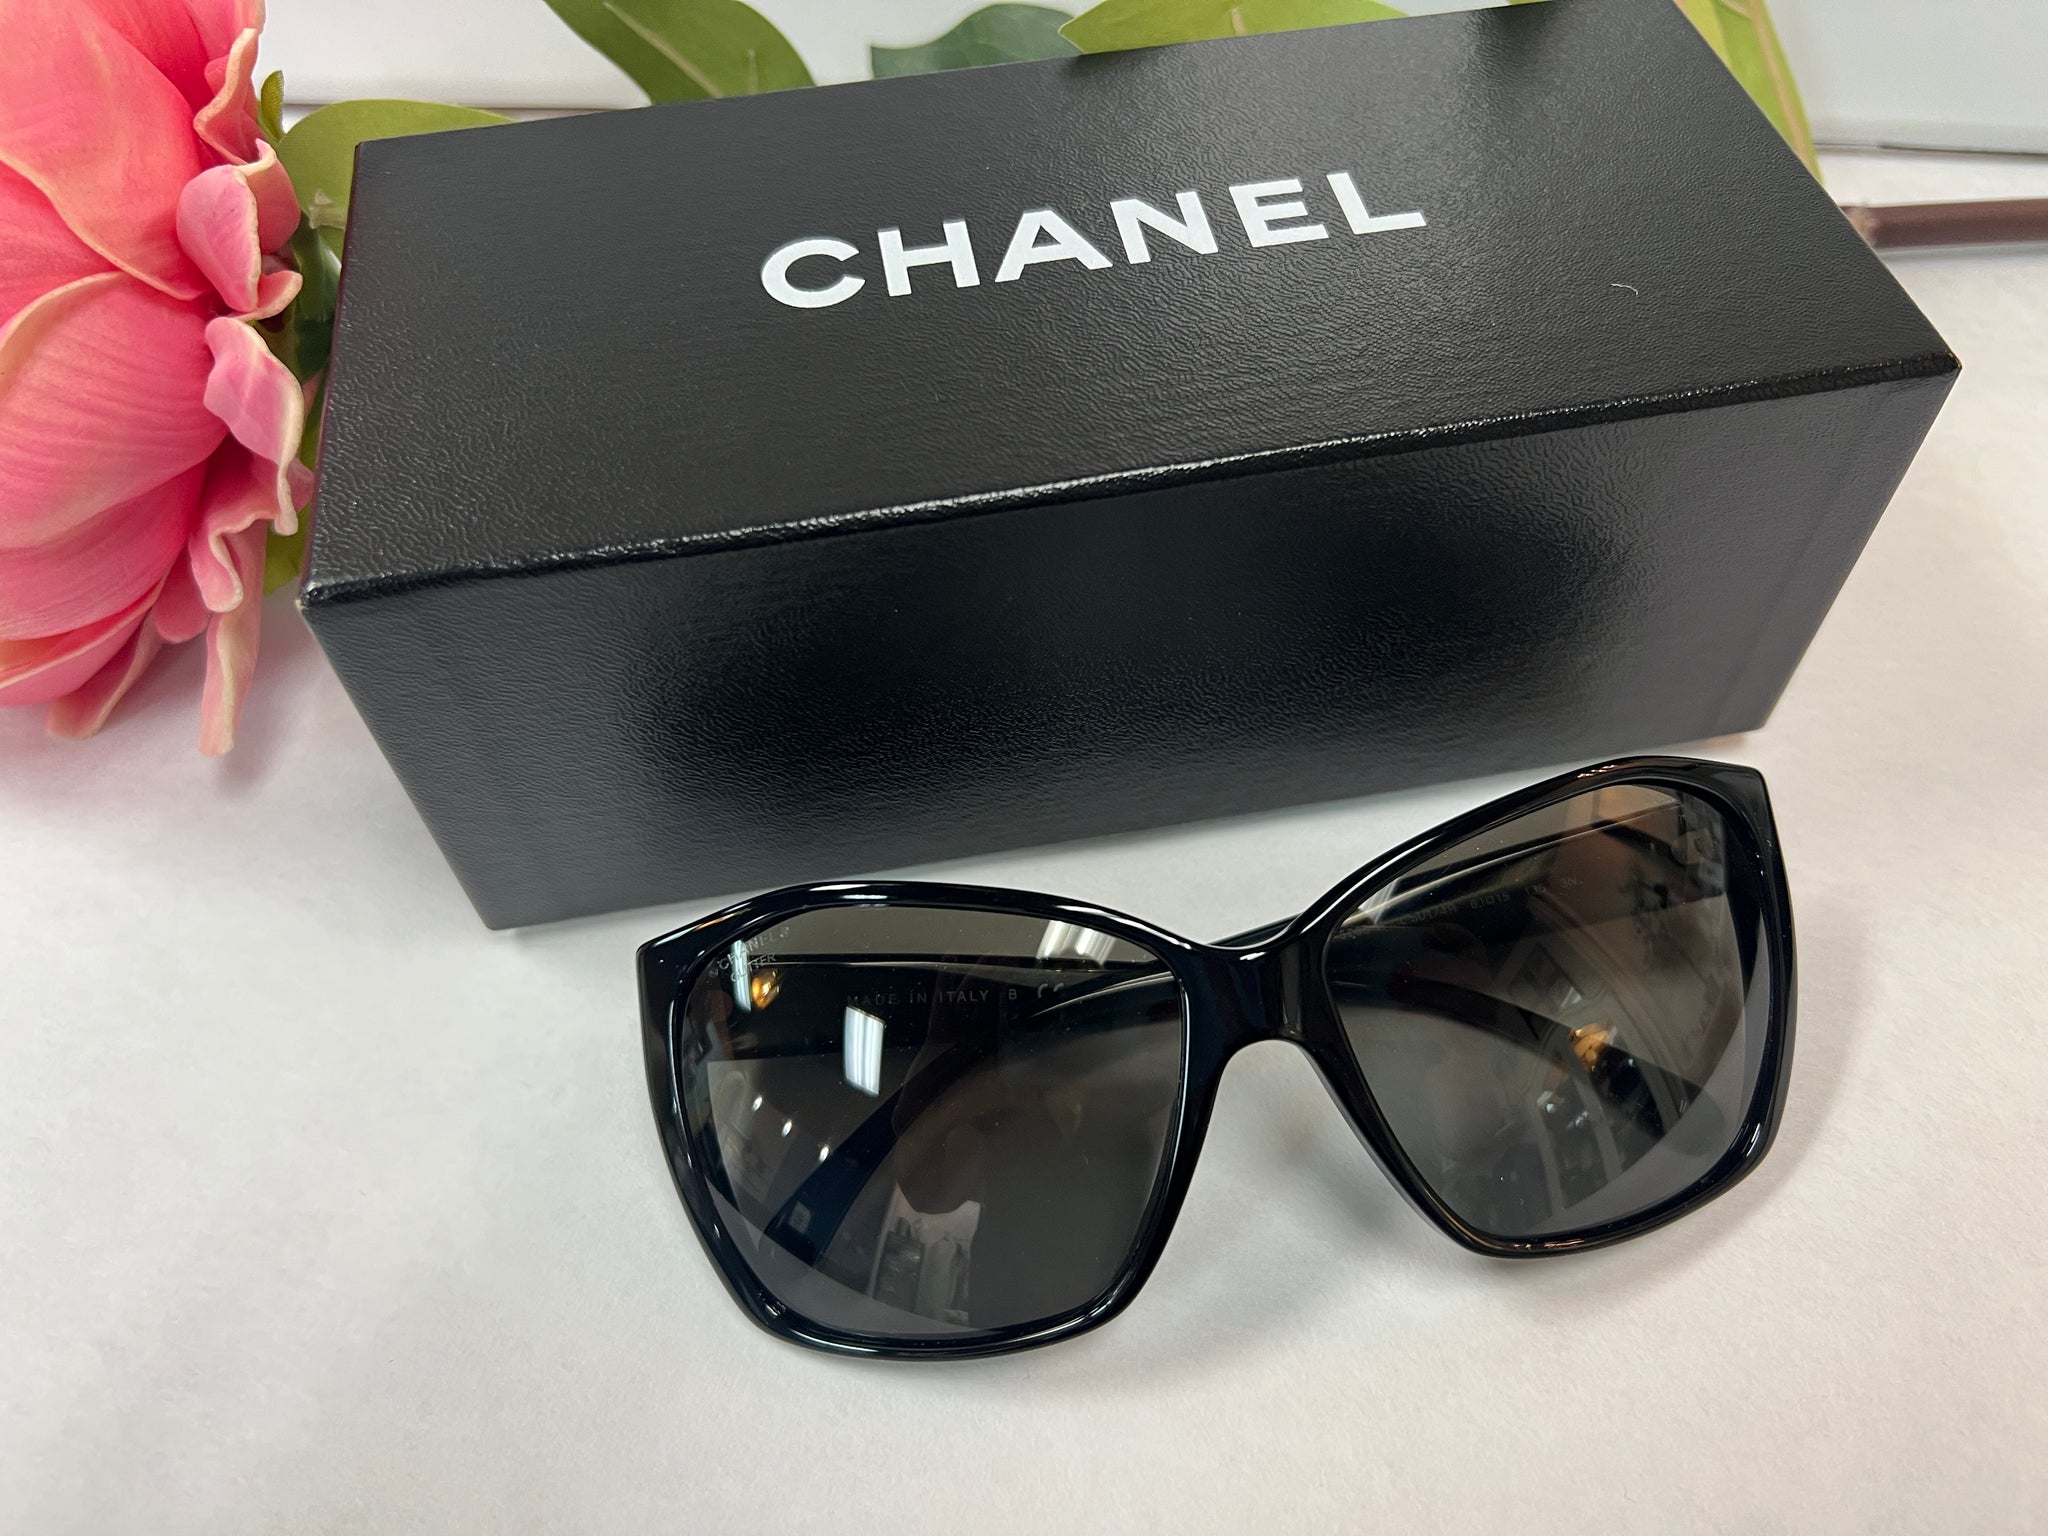 Glamour Crystal Oversize Statement Embellished Sunglasses 